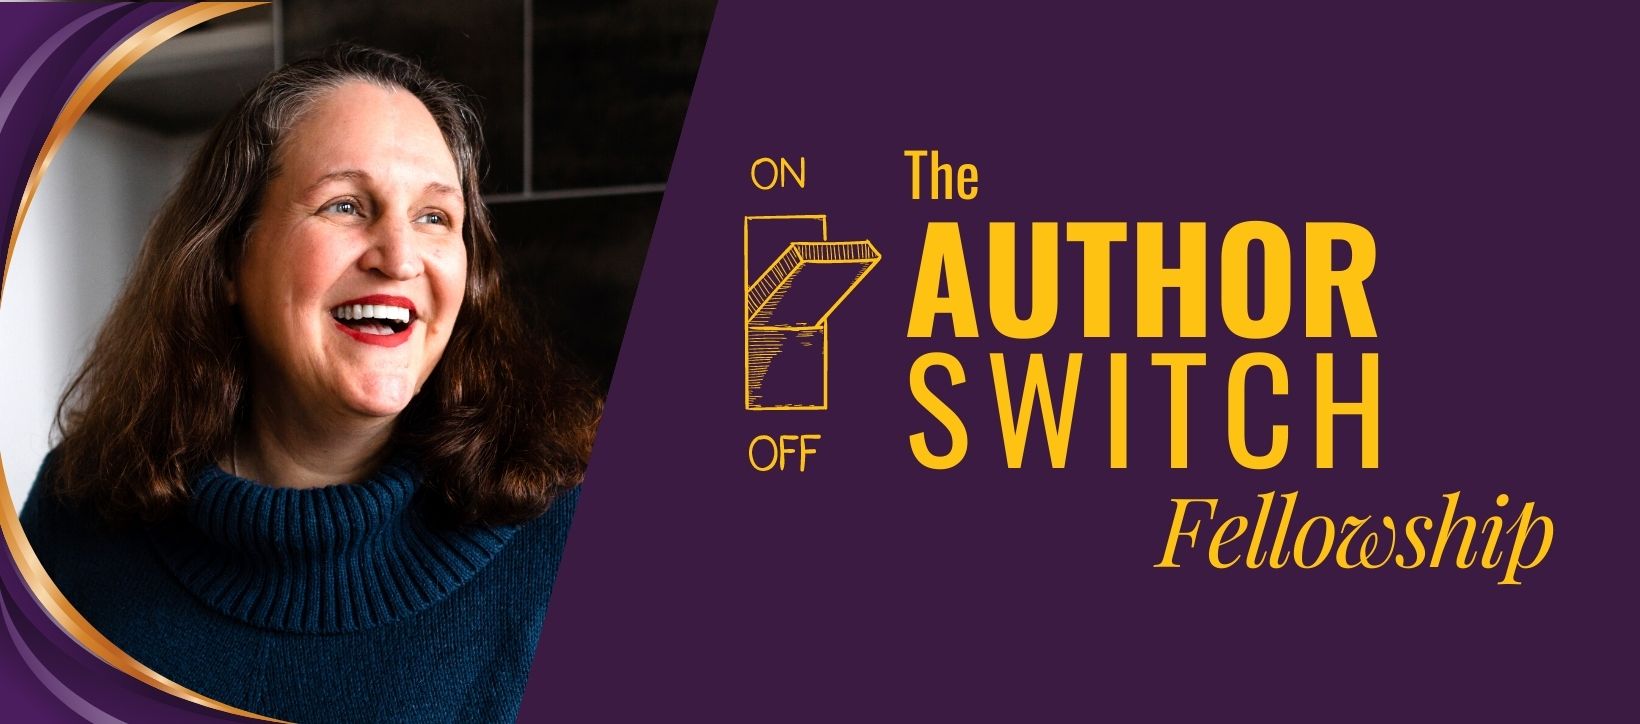 Author Switch Fellowship